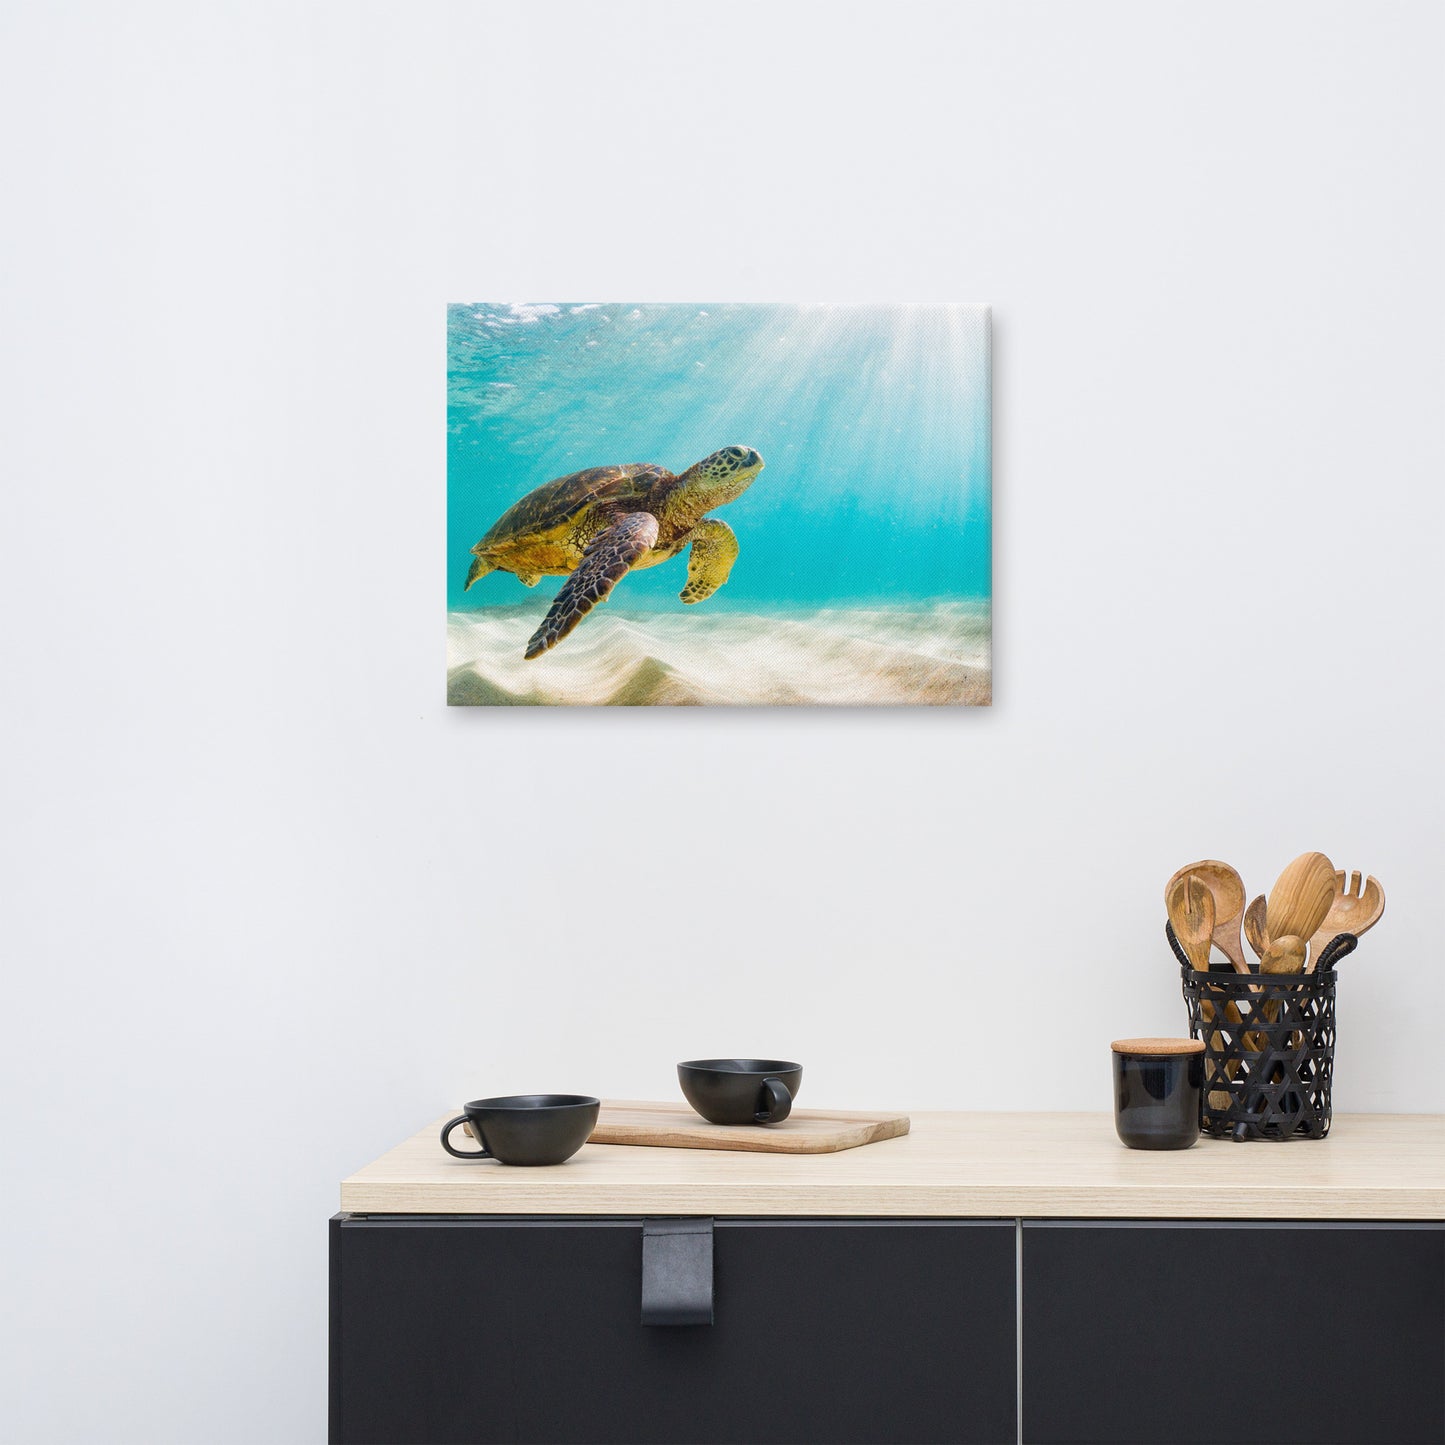 Hawaiian Green Sea Turtle In Turquoise Blue Sea and Sandbars Animal Wildlife Photograph Canvas Wall Art Print